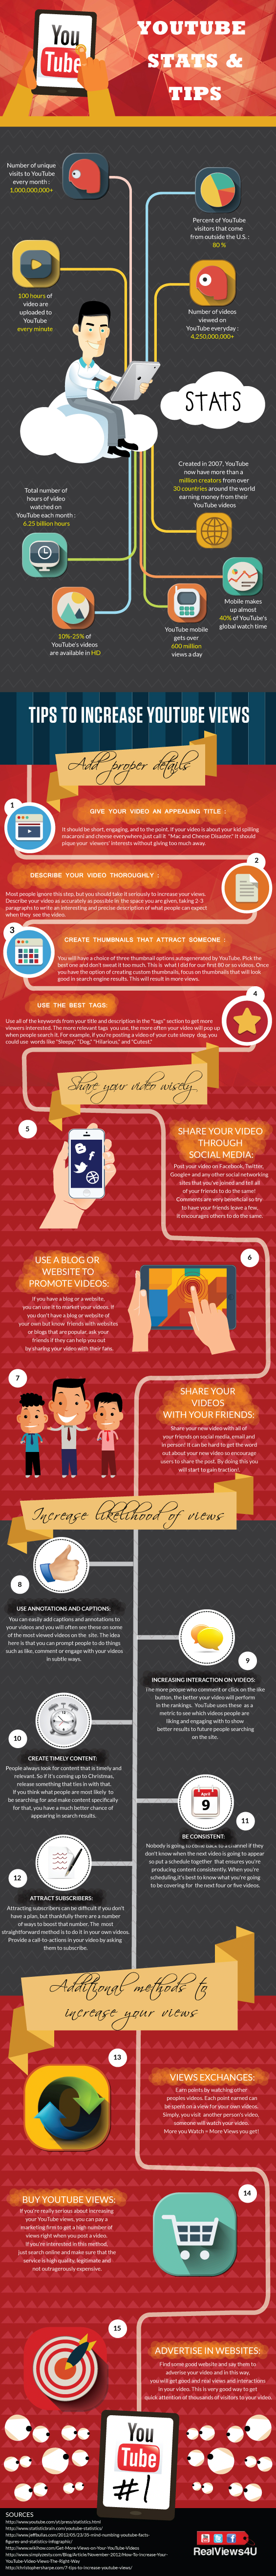 15 Ways to Increase YouTube Views